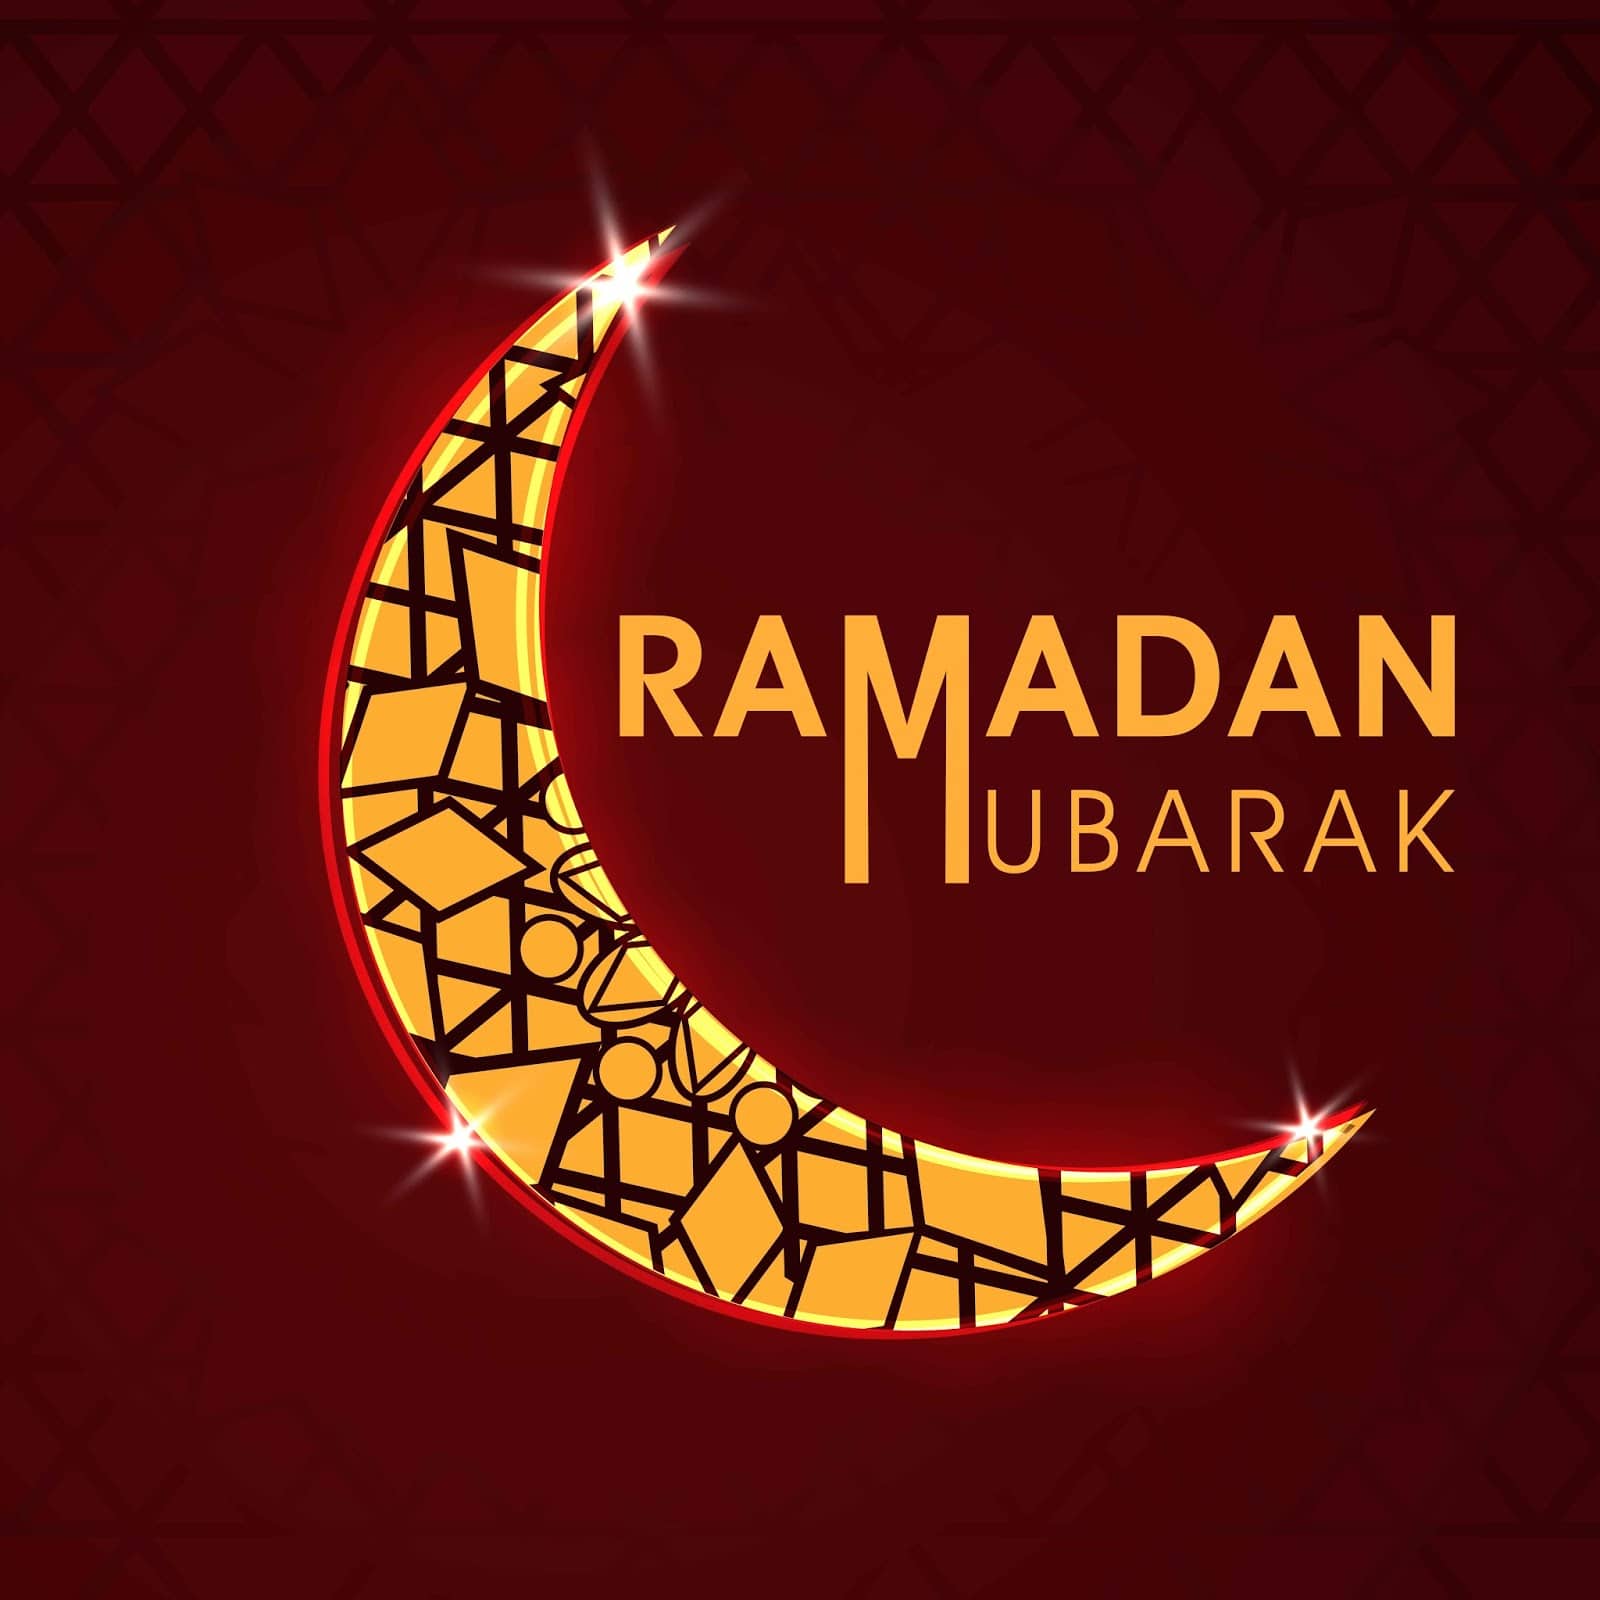 Ramadan Wishes Images | Oppidan Library